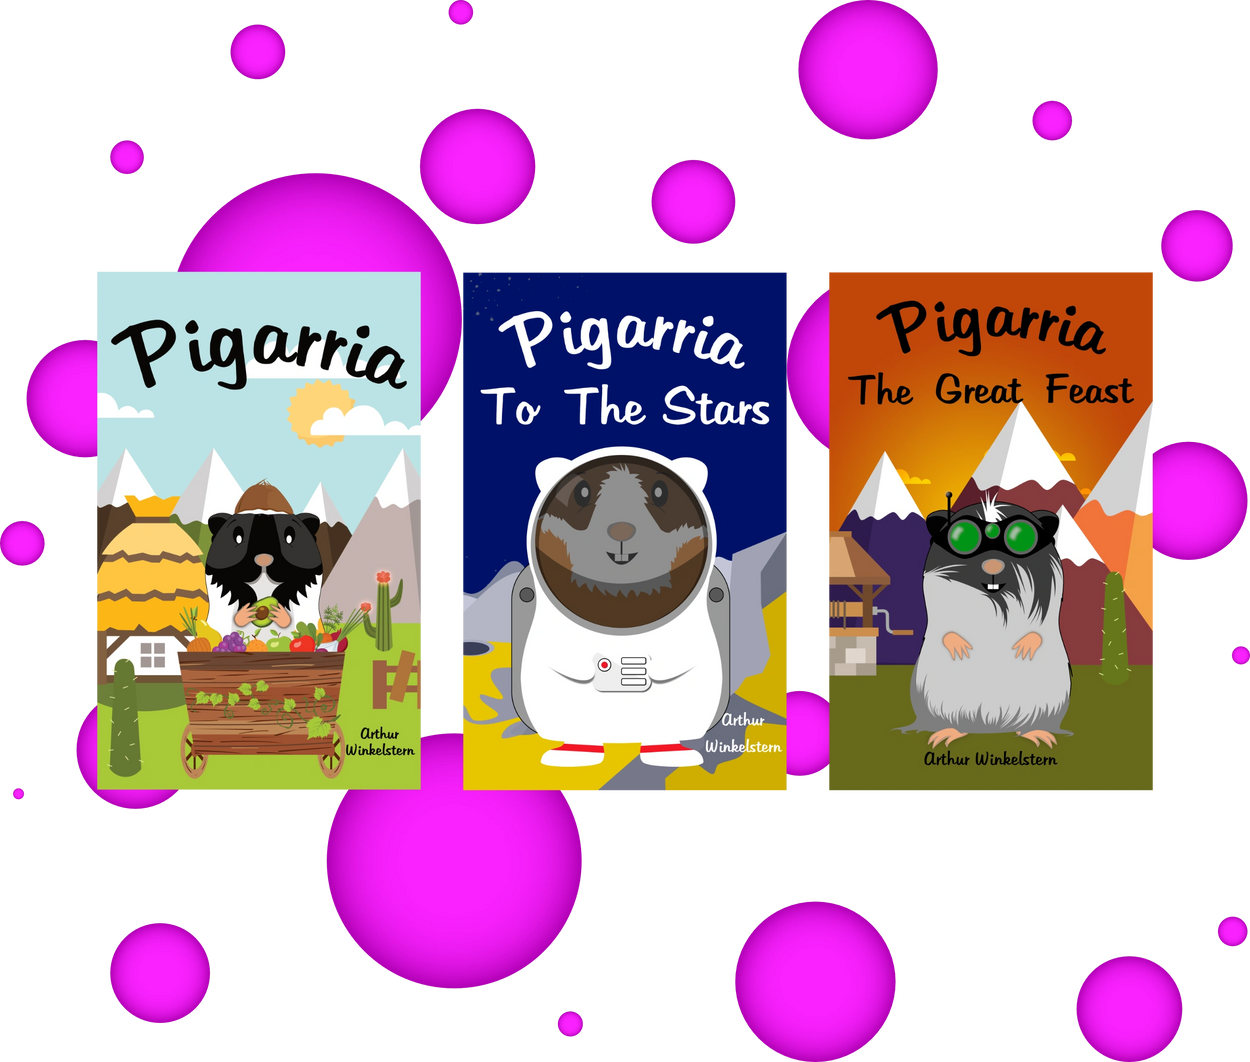 Guinea pig books, wild peegs, guinea pig children's books, children's books animals, space, pigarria